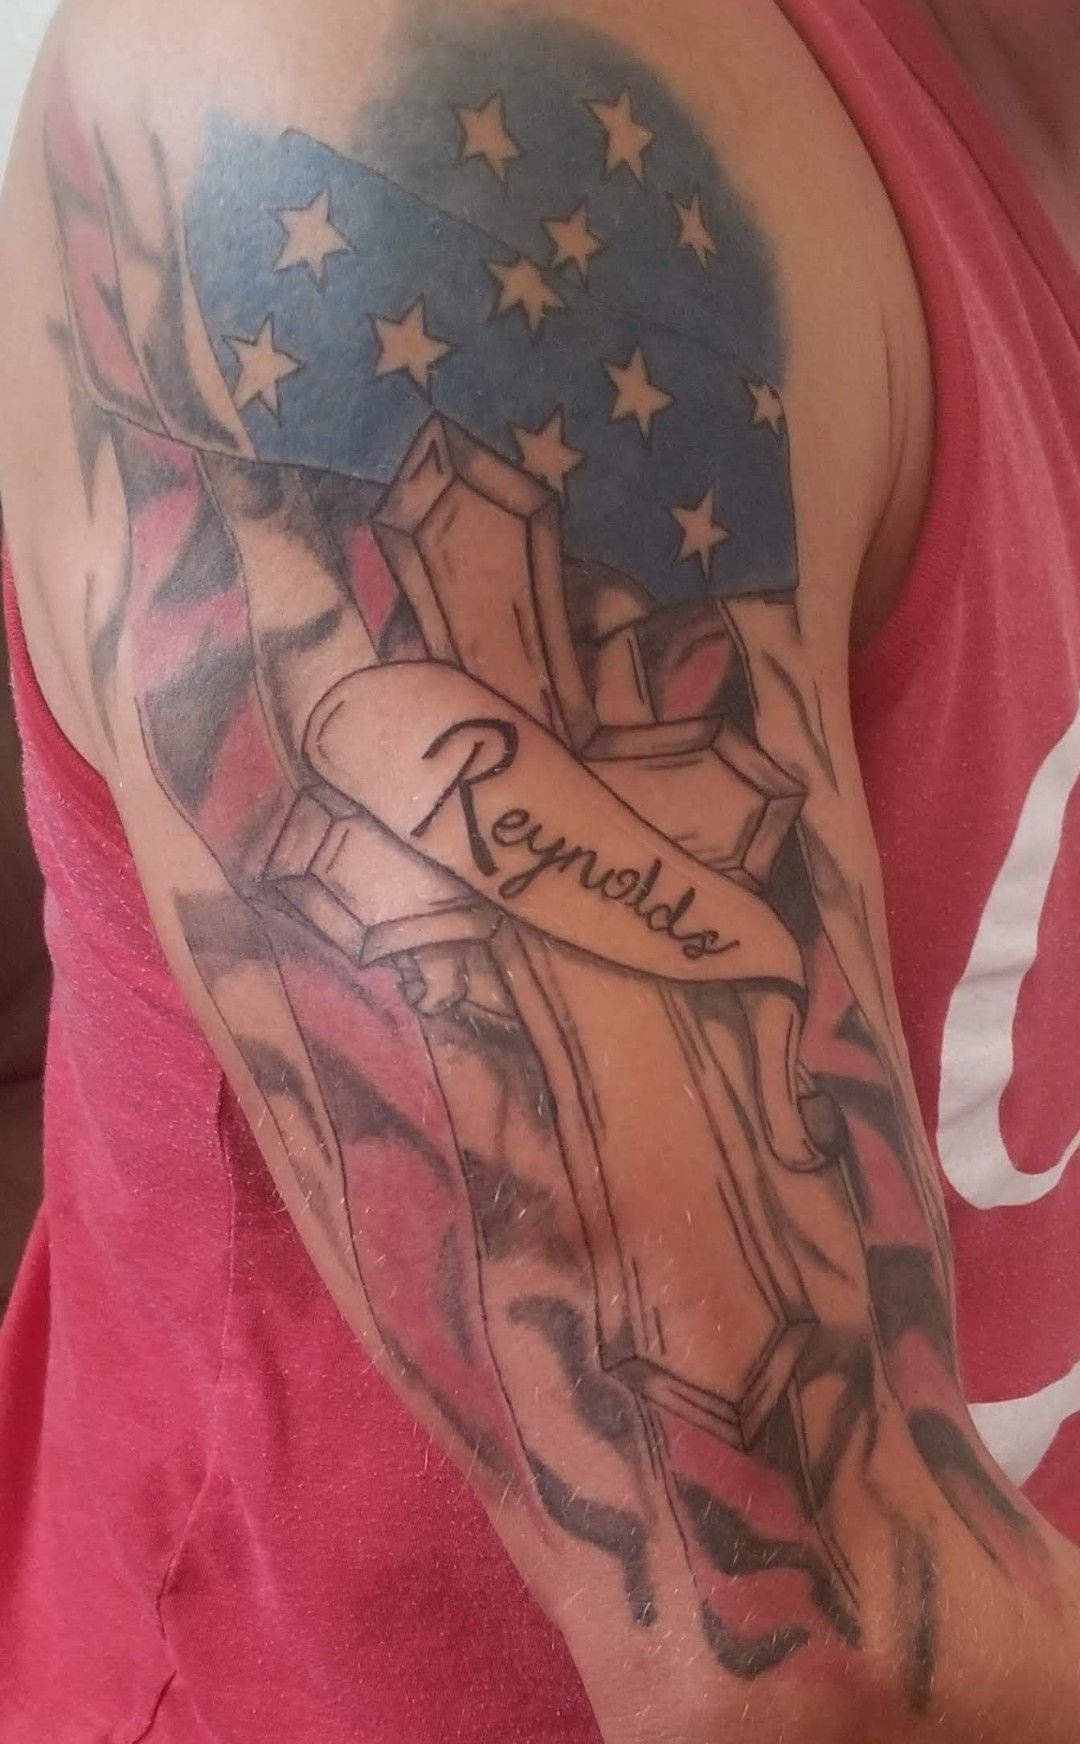 black and white american flag cross tattoo